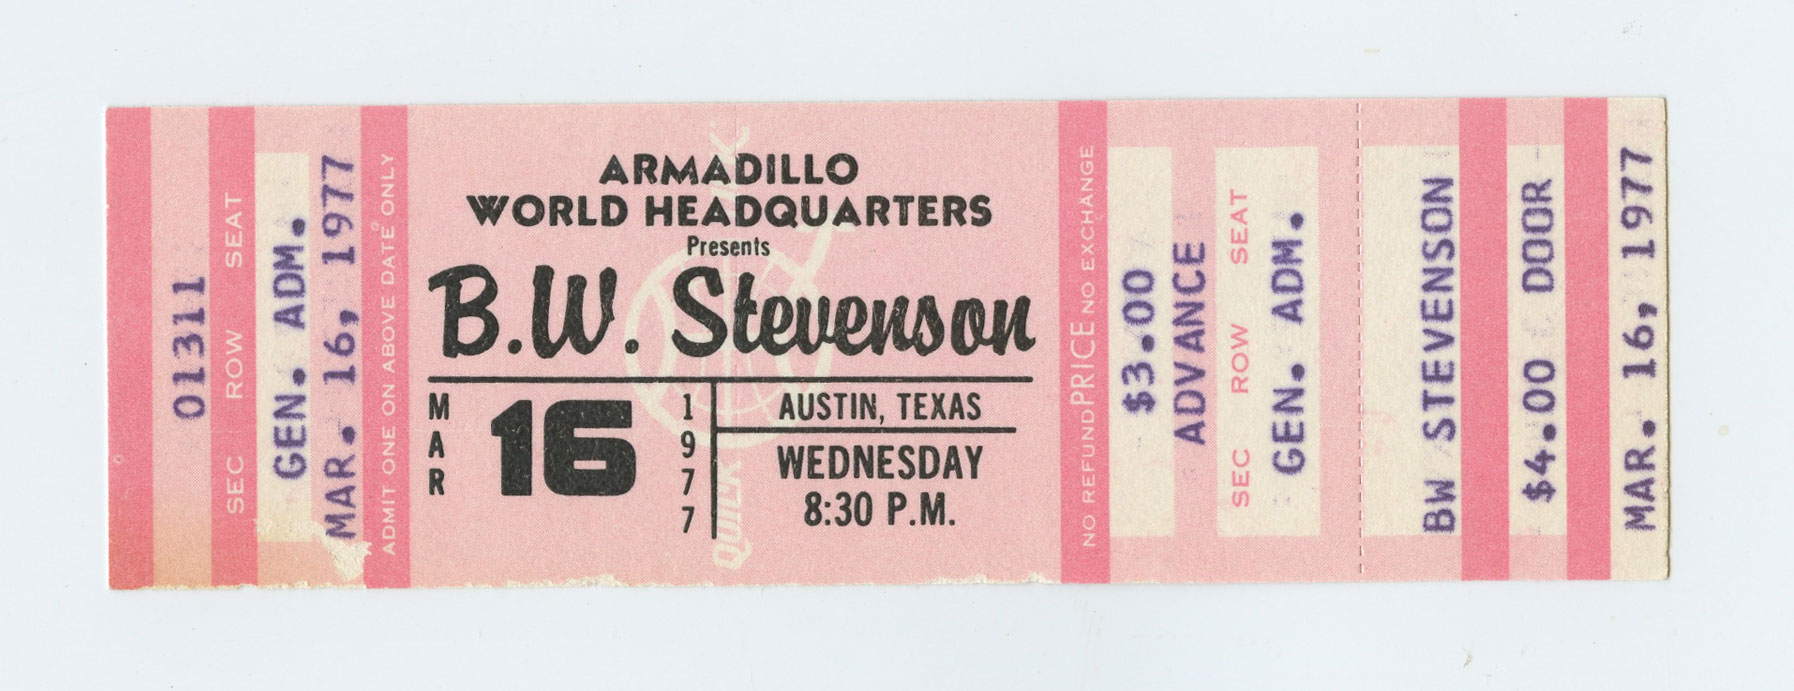 B.W. Stevenson Vintage Ticket 1977 Mar 19 Armadillo World Headquarters Austin TX 